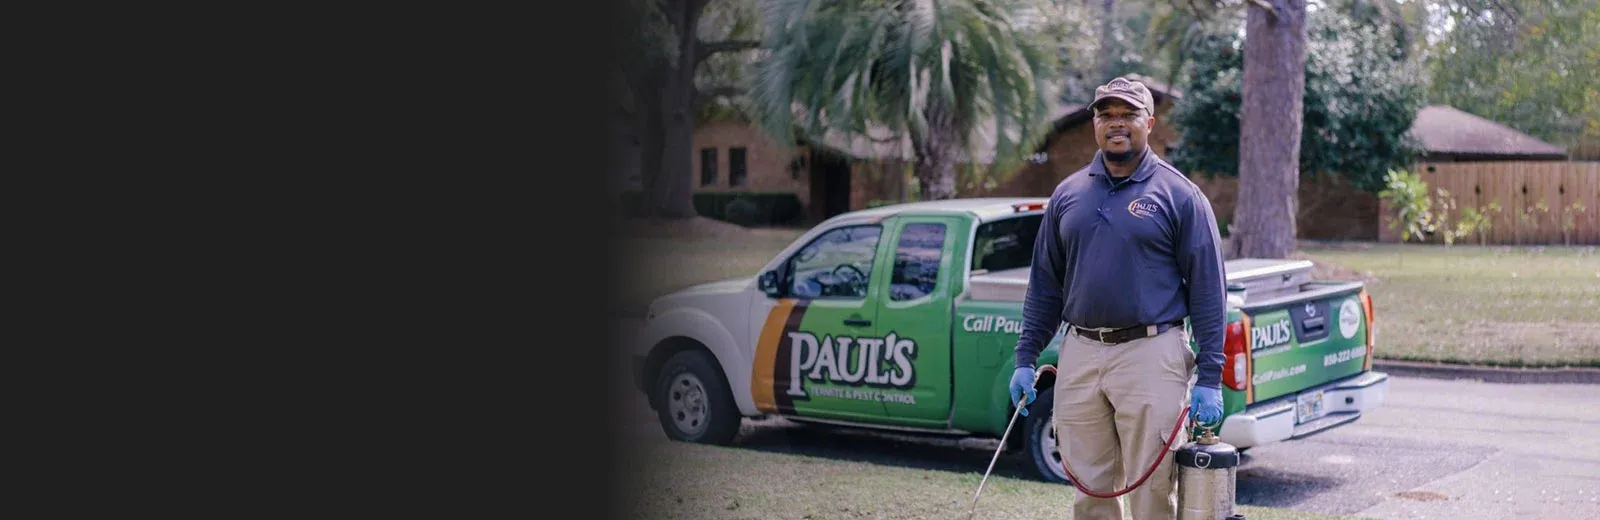 Paul's Pest employee standing in front of truck